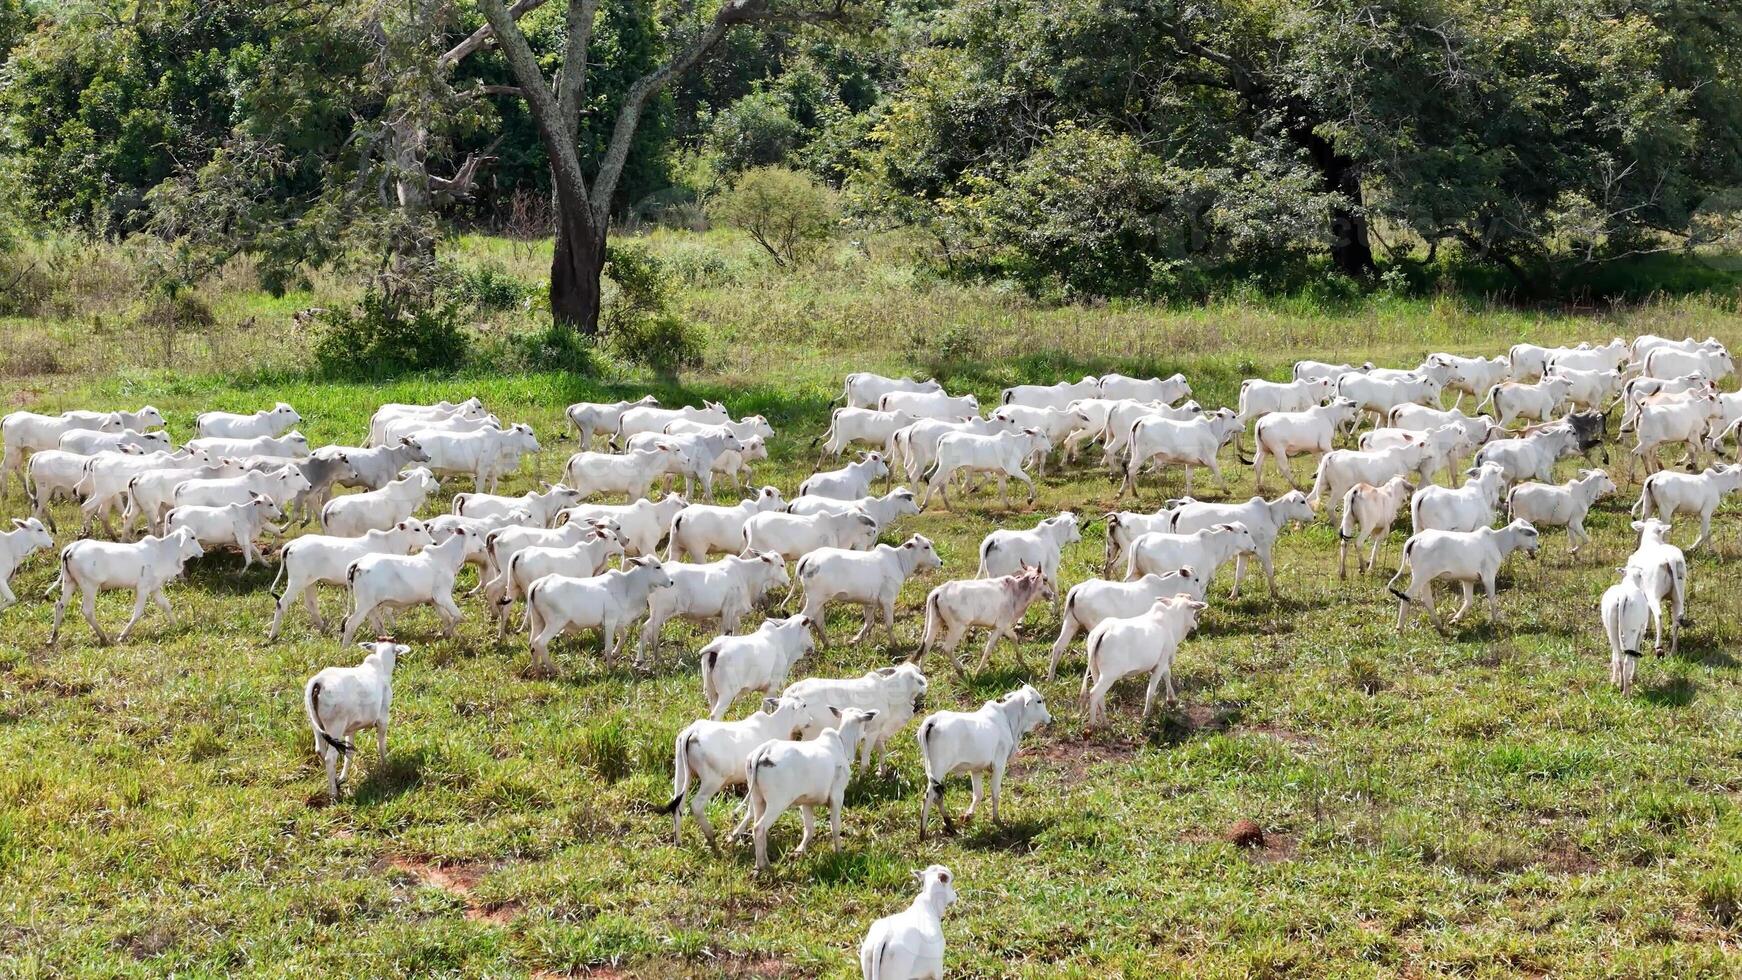 campo pasto zona con blanco vacas pasto foto